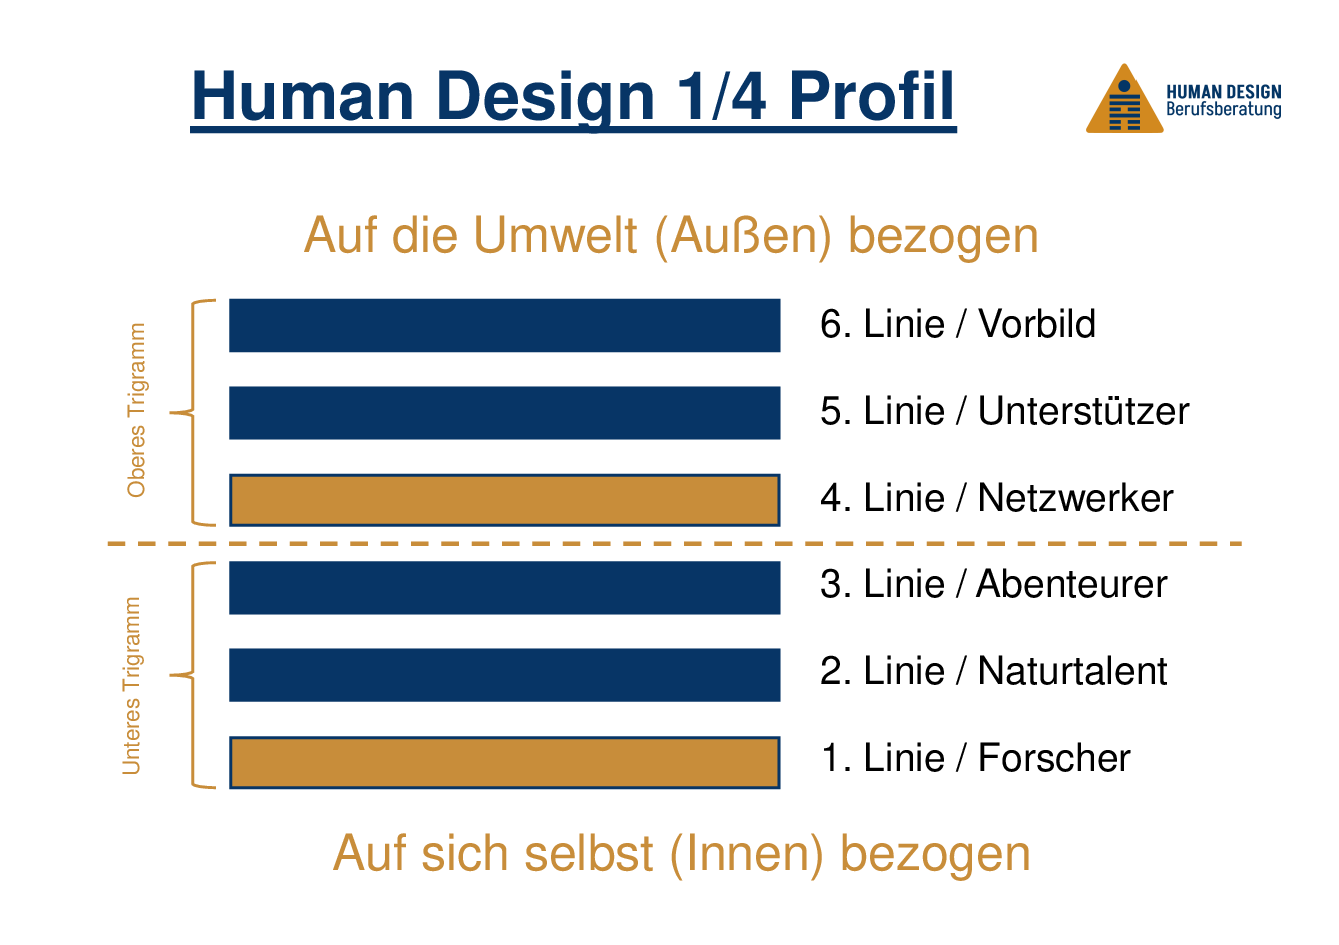 Human Design 1/4 Profil im Beruf